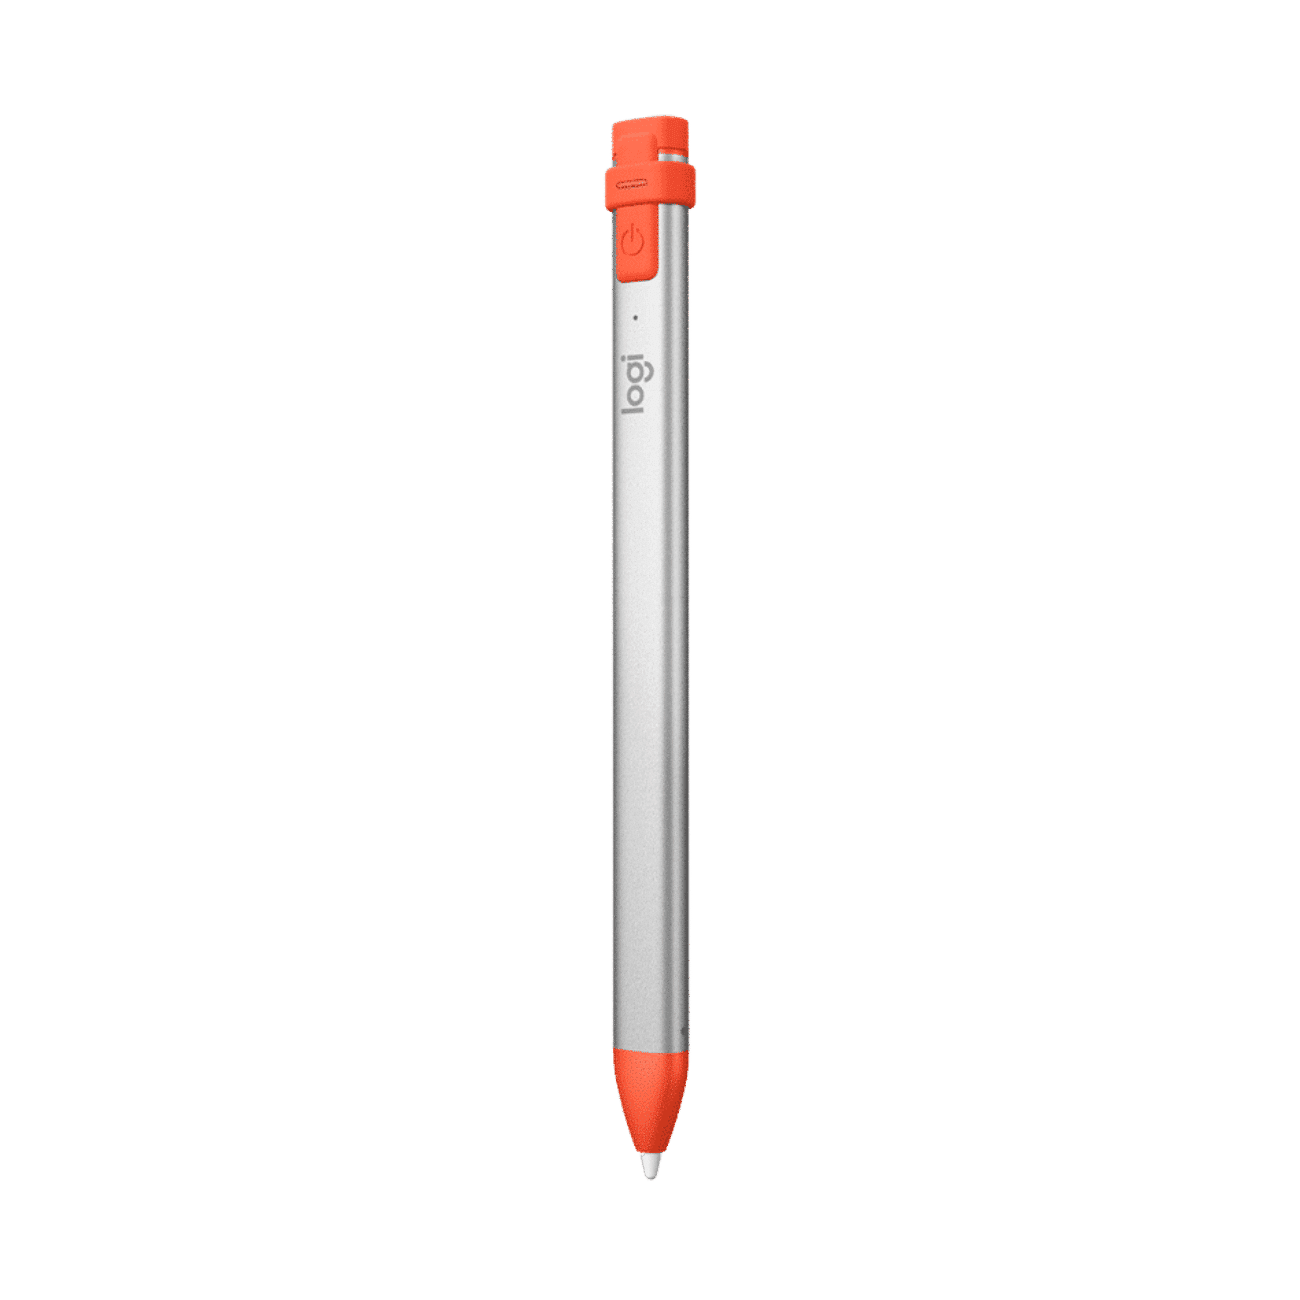 logitech stylus for iPad - Orange and silver